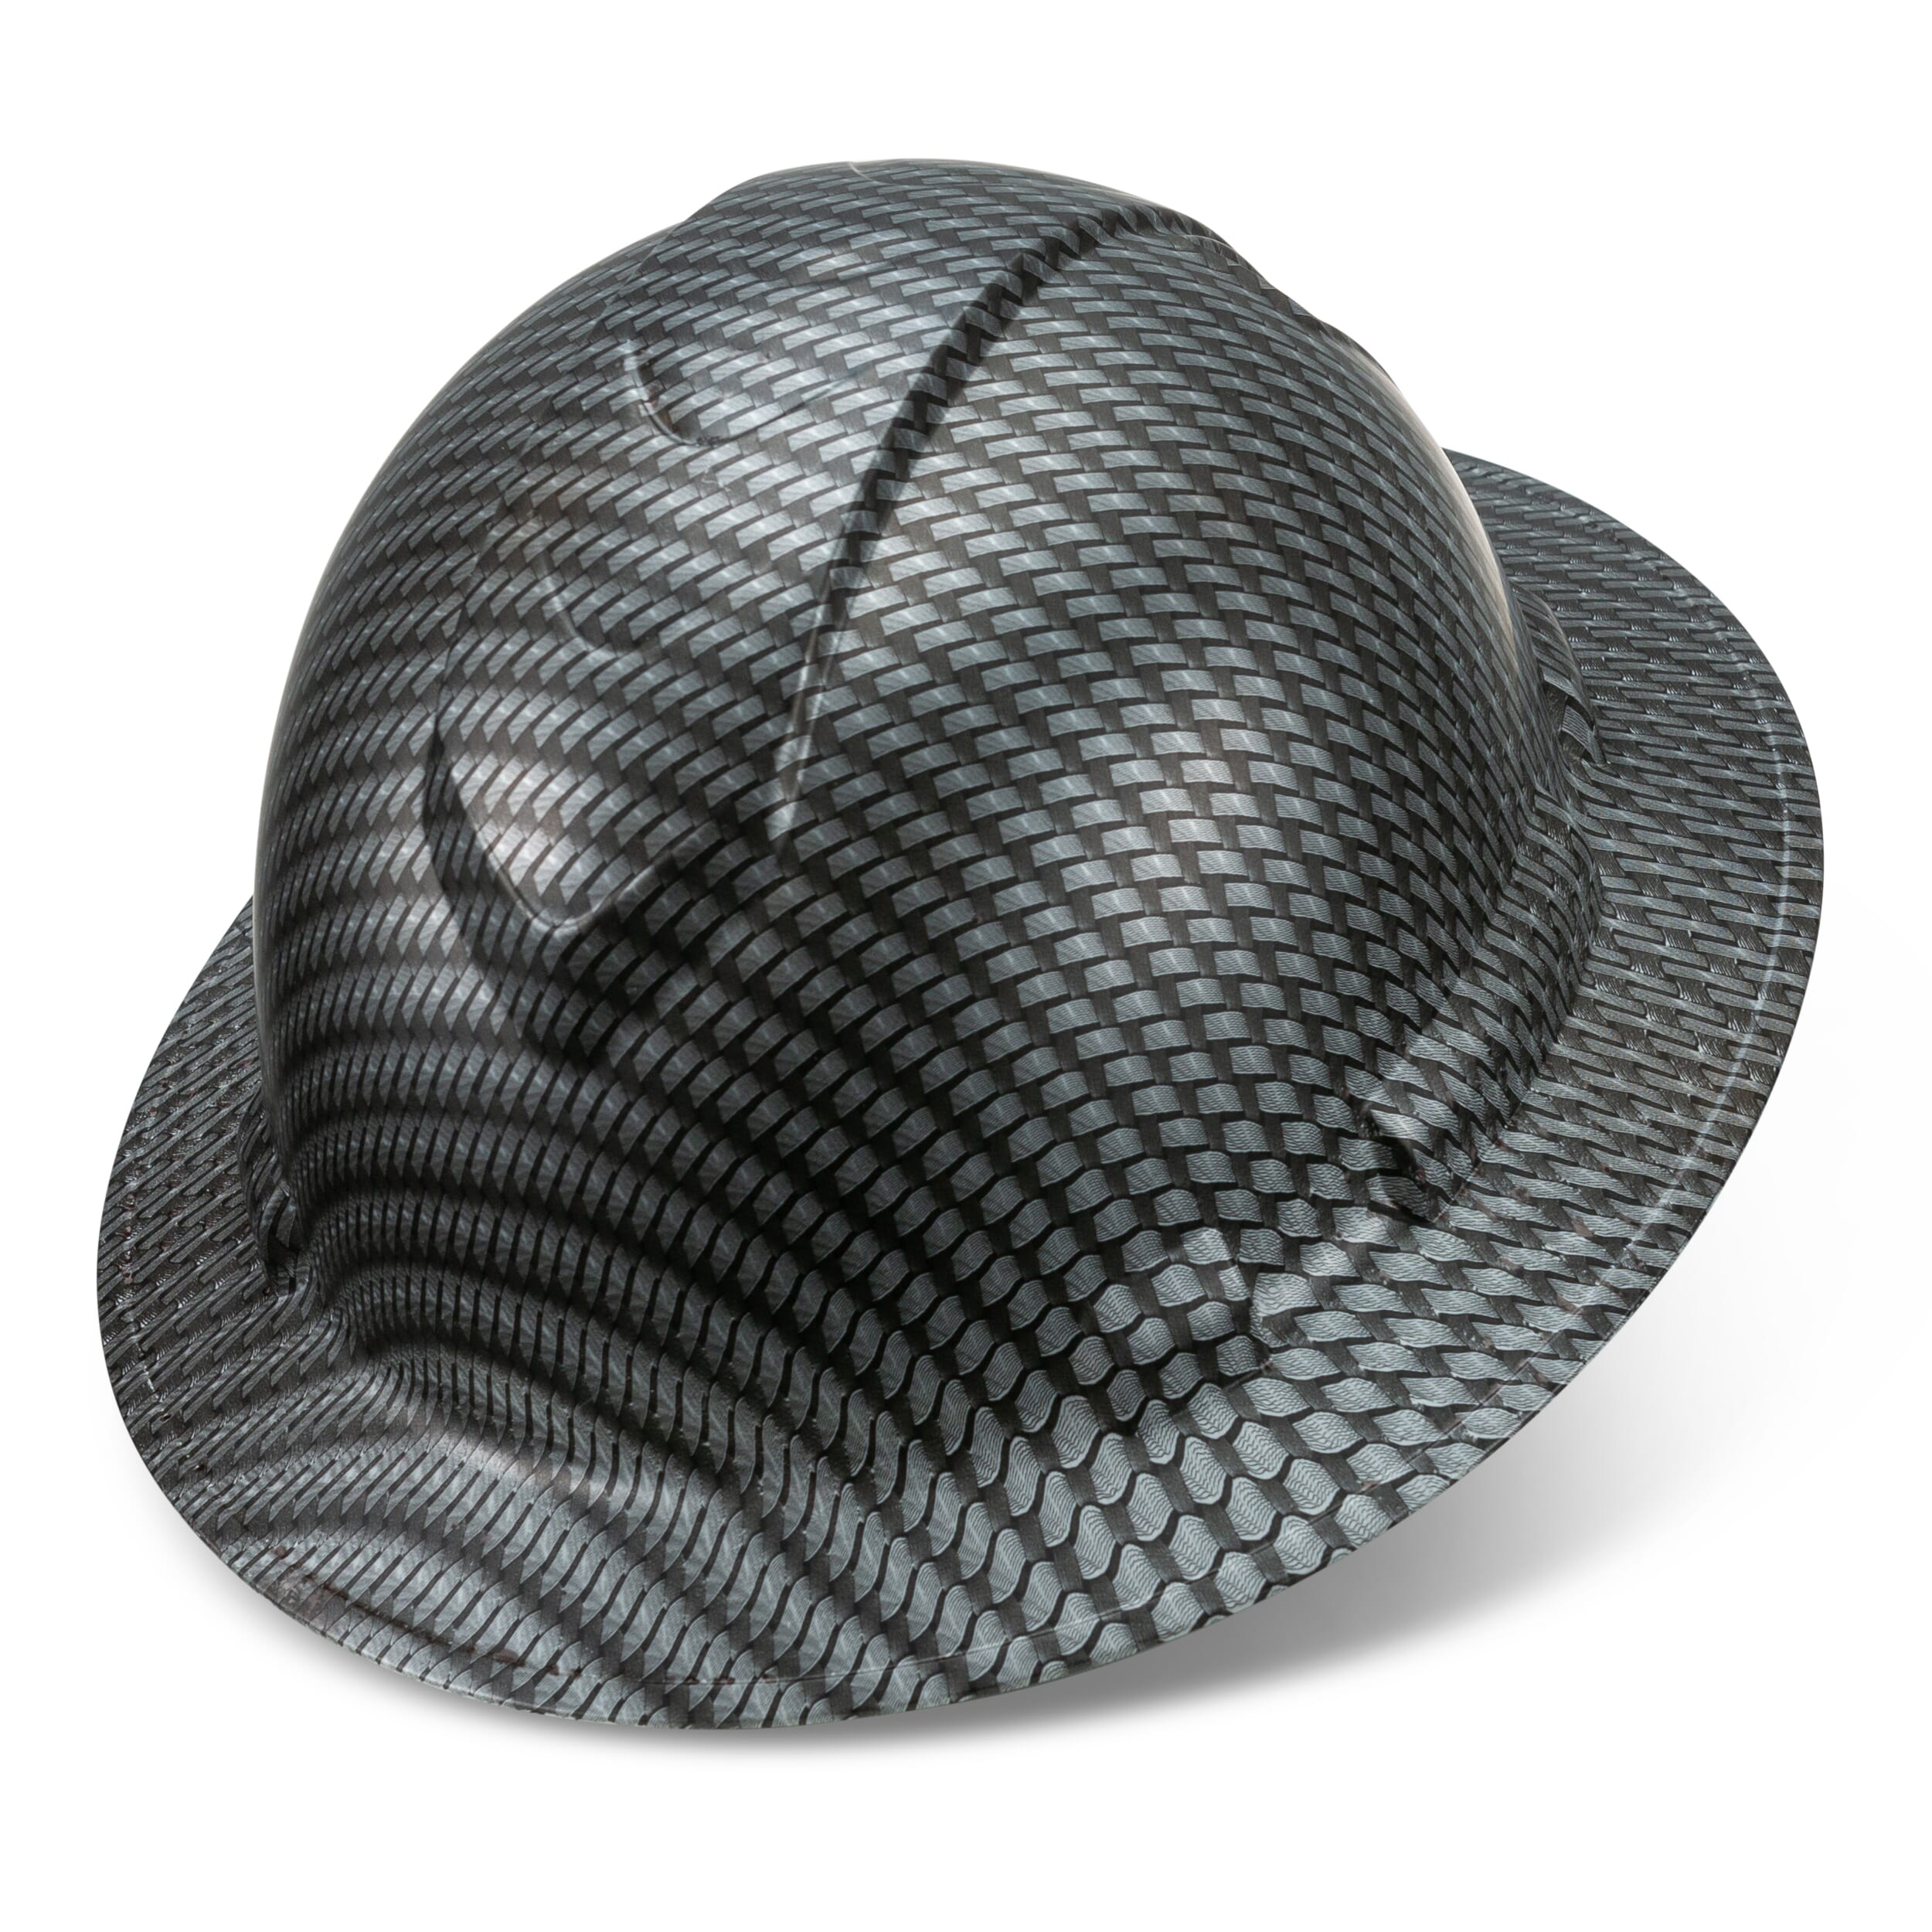 Full Brim Pyramex Hard Hat, Custom Metal Wicker Design, Safety Helmet, 6 Point